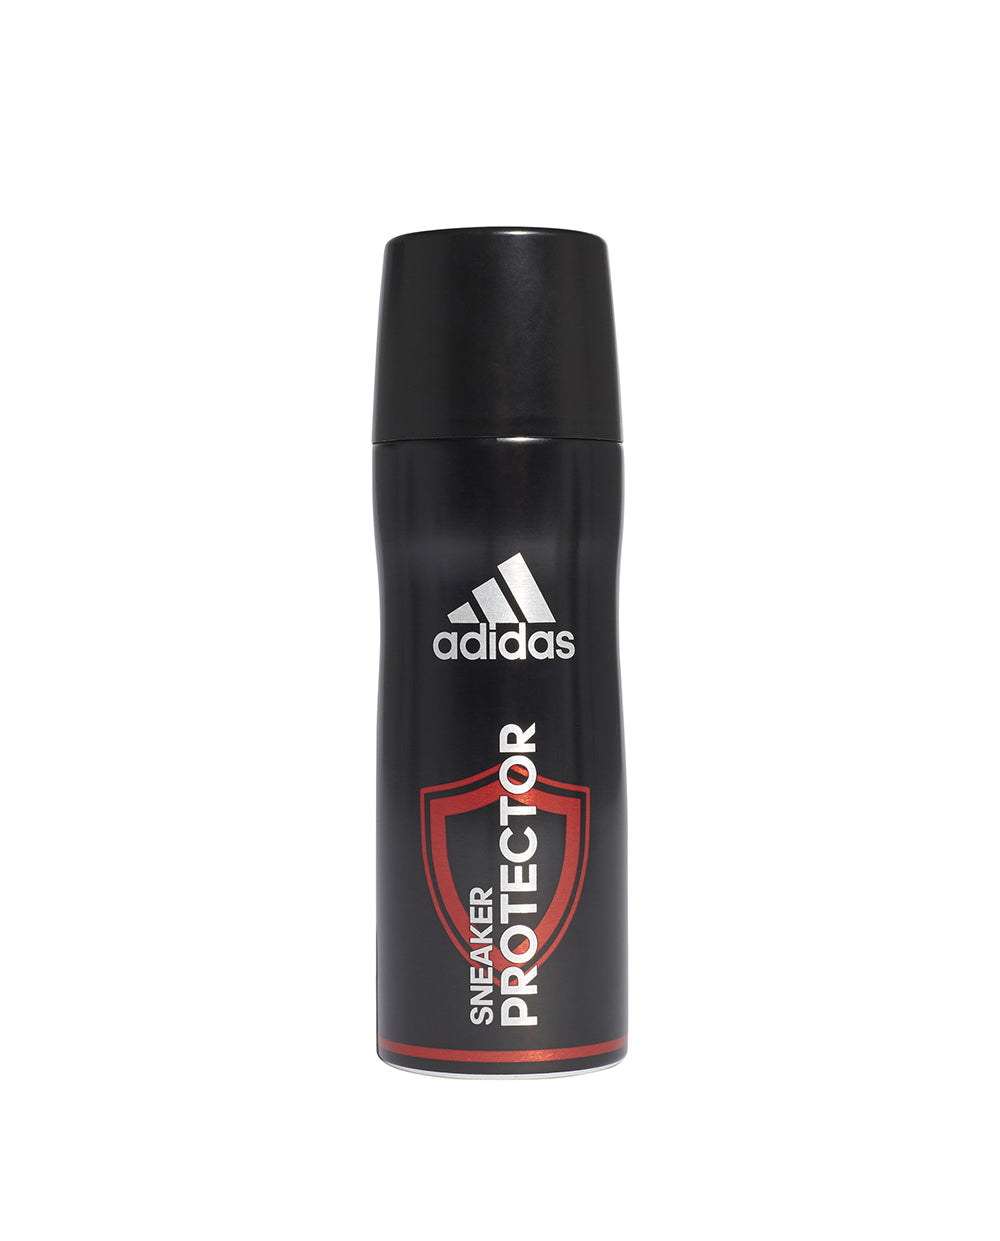 Adidas Spray Protector